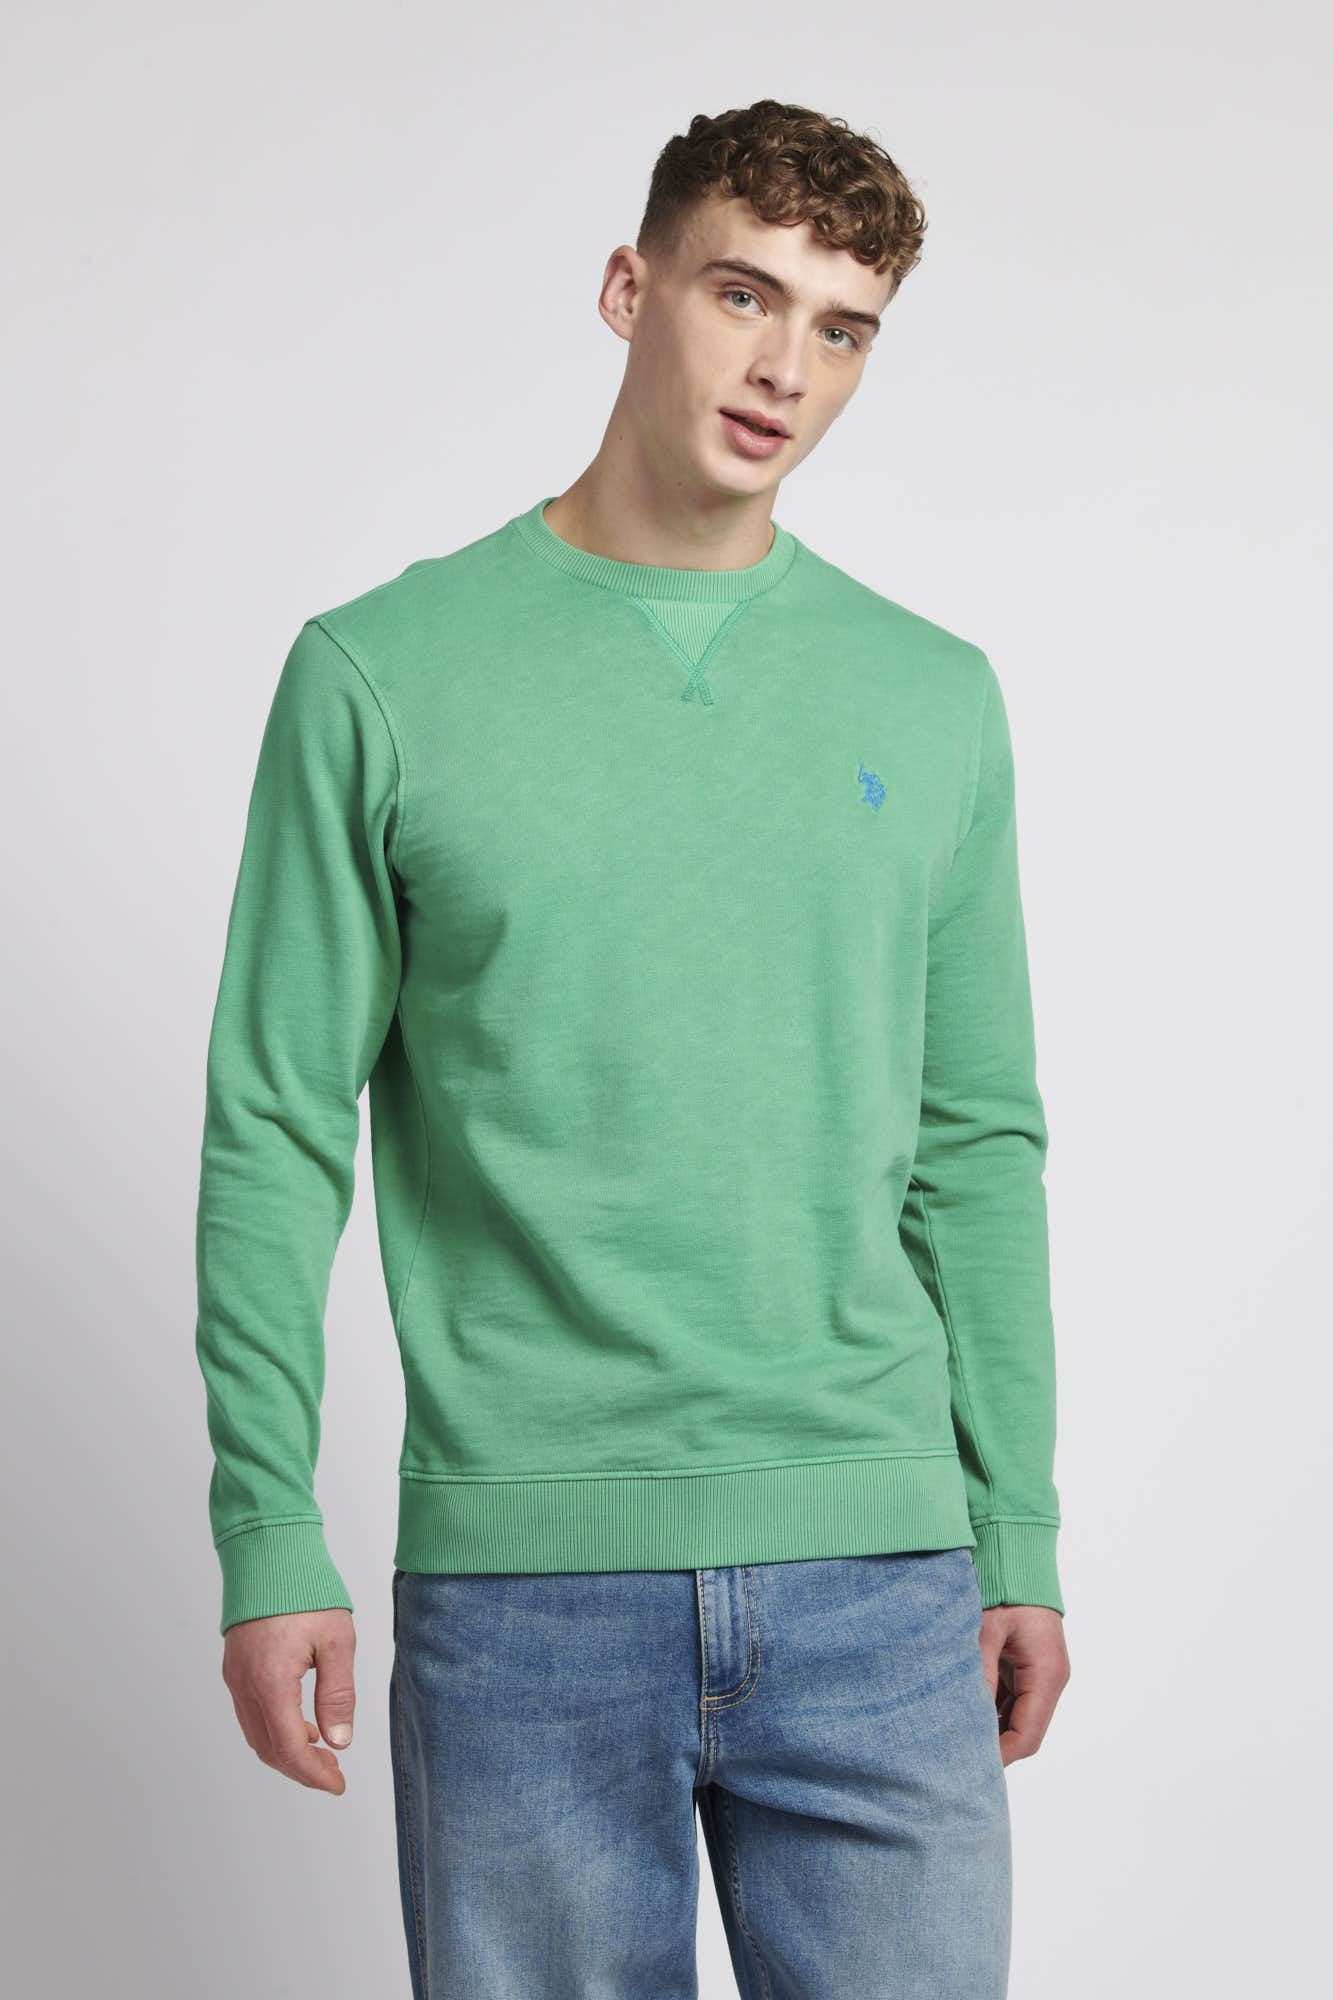 U.S. Polo Assn. Mens Garment Dye Crew Neck Sweatshirt in Golf Green